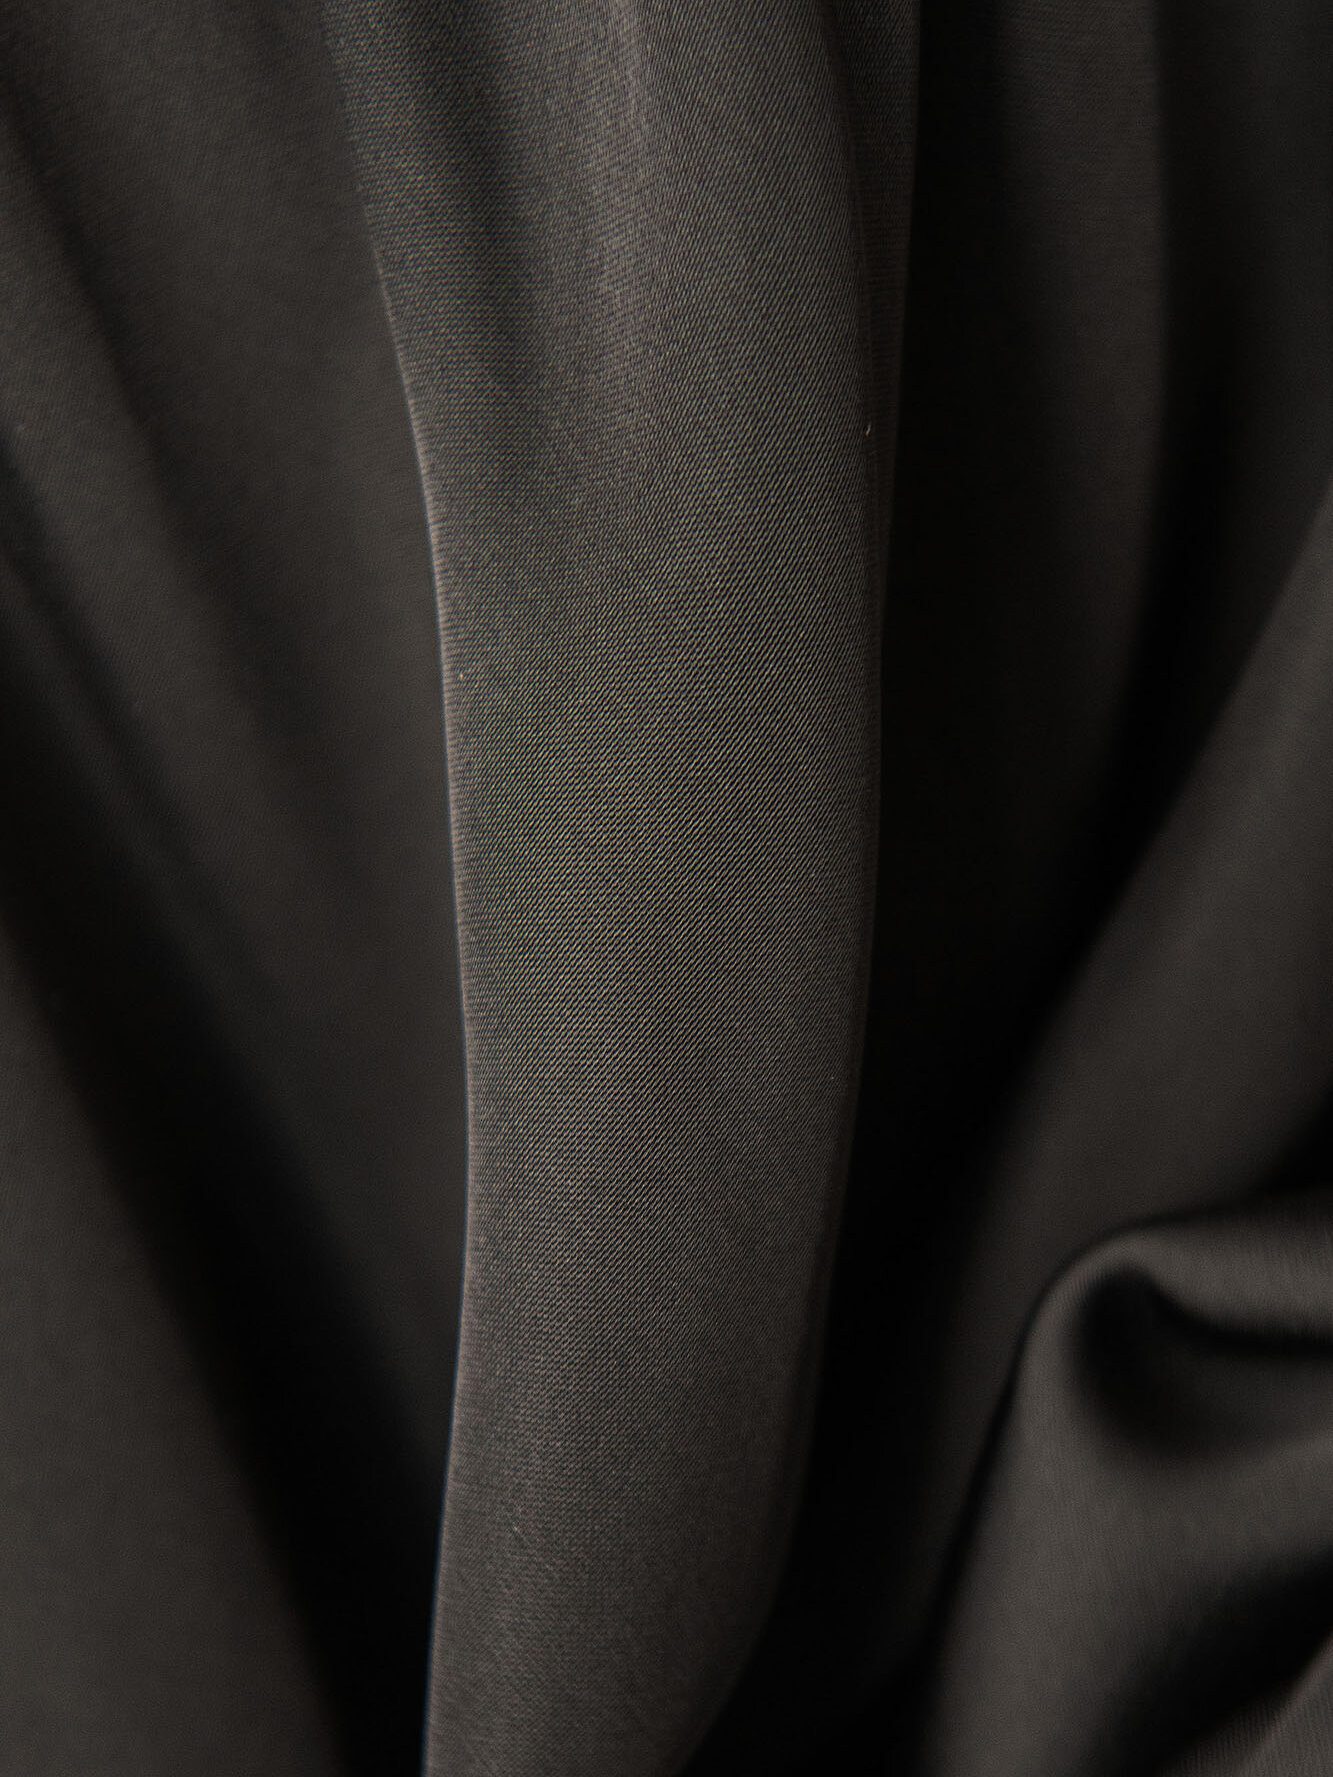 black strappy dress fabric 1 uai • Sassa Björg